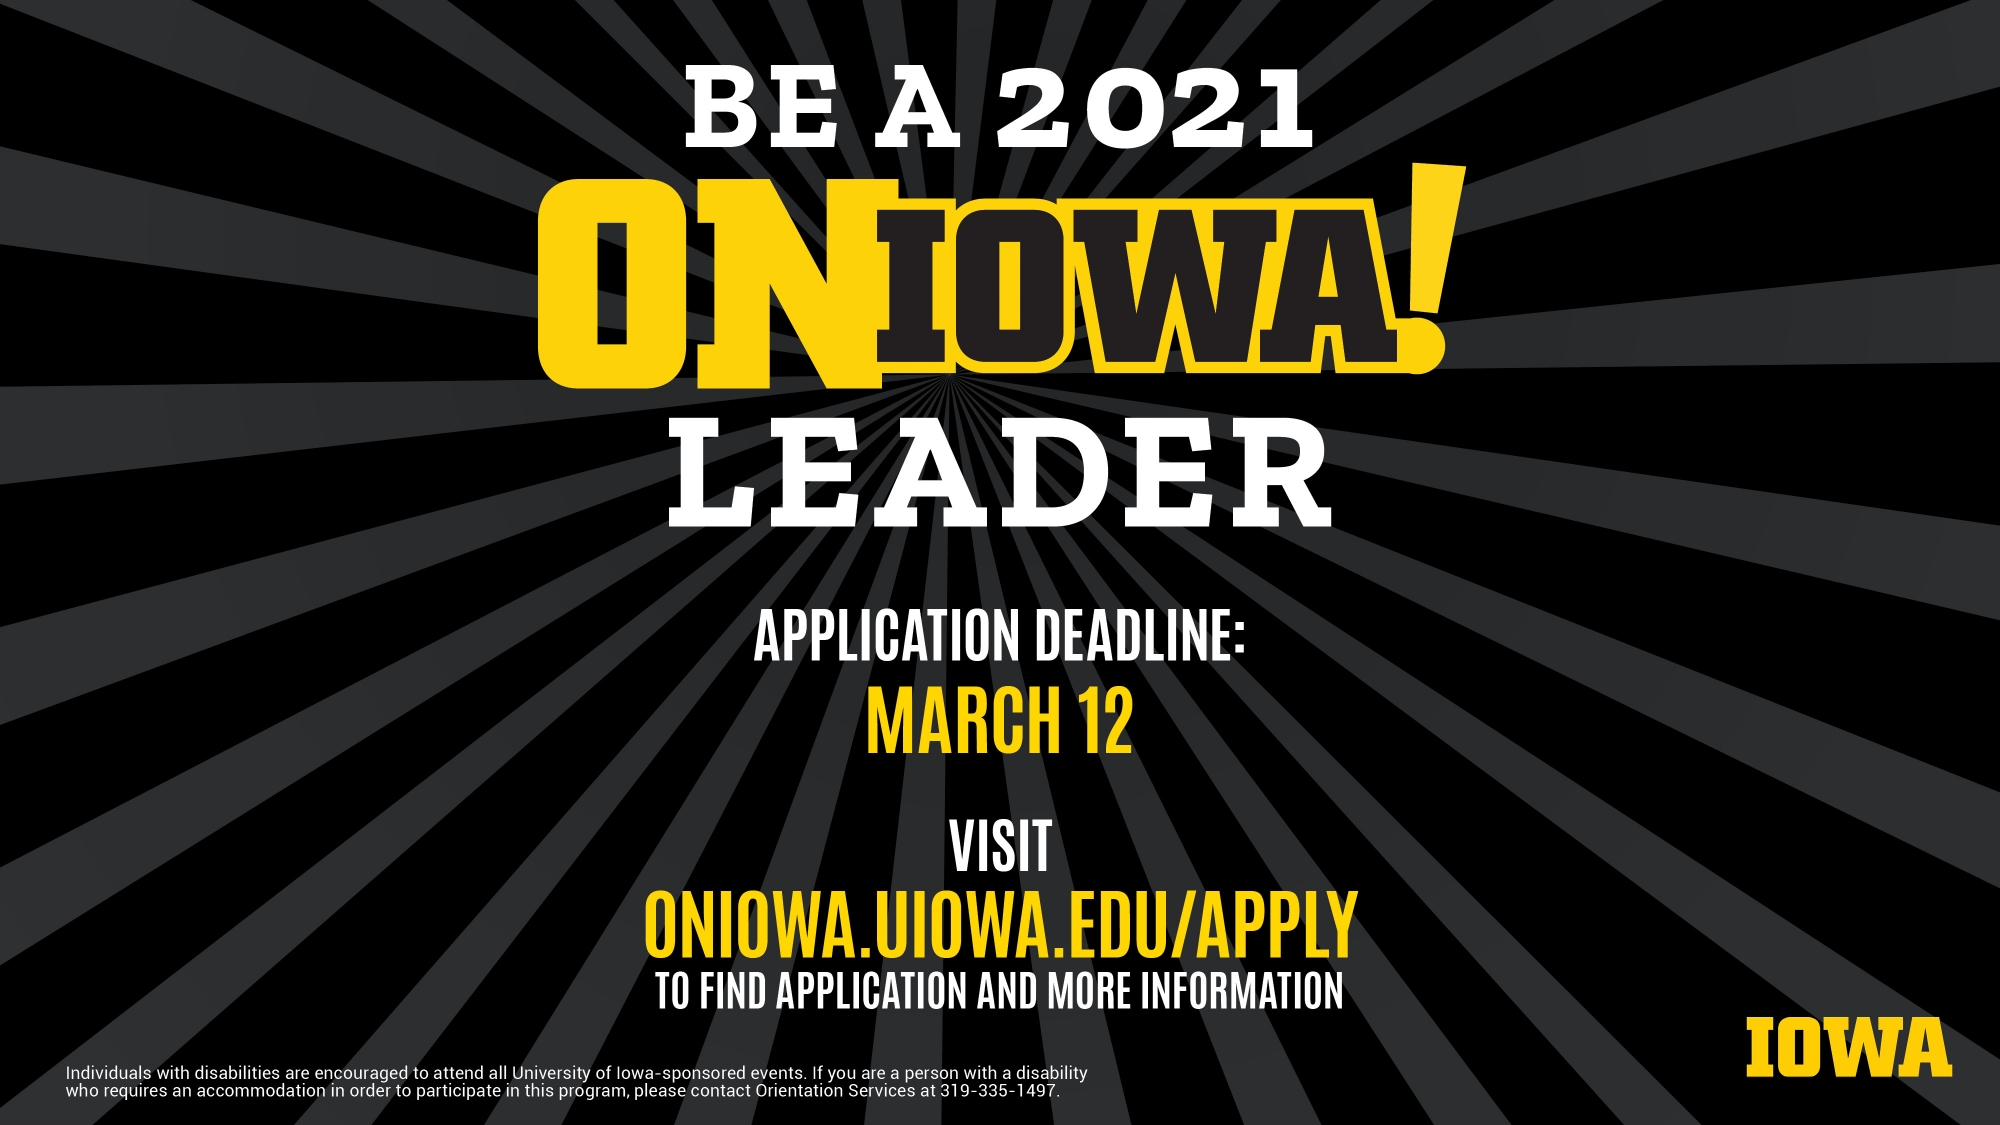 On Iowa Leader Recruitment